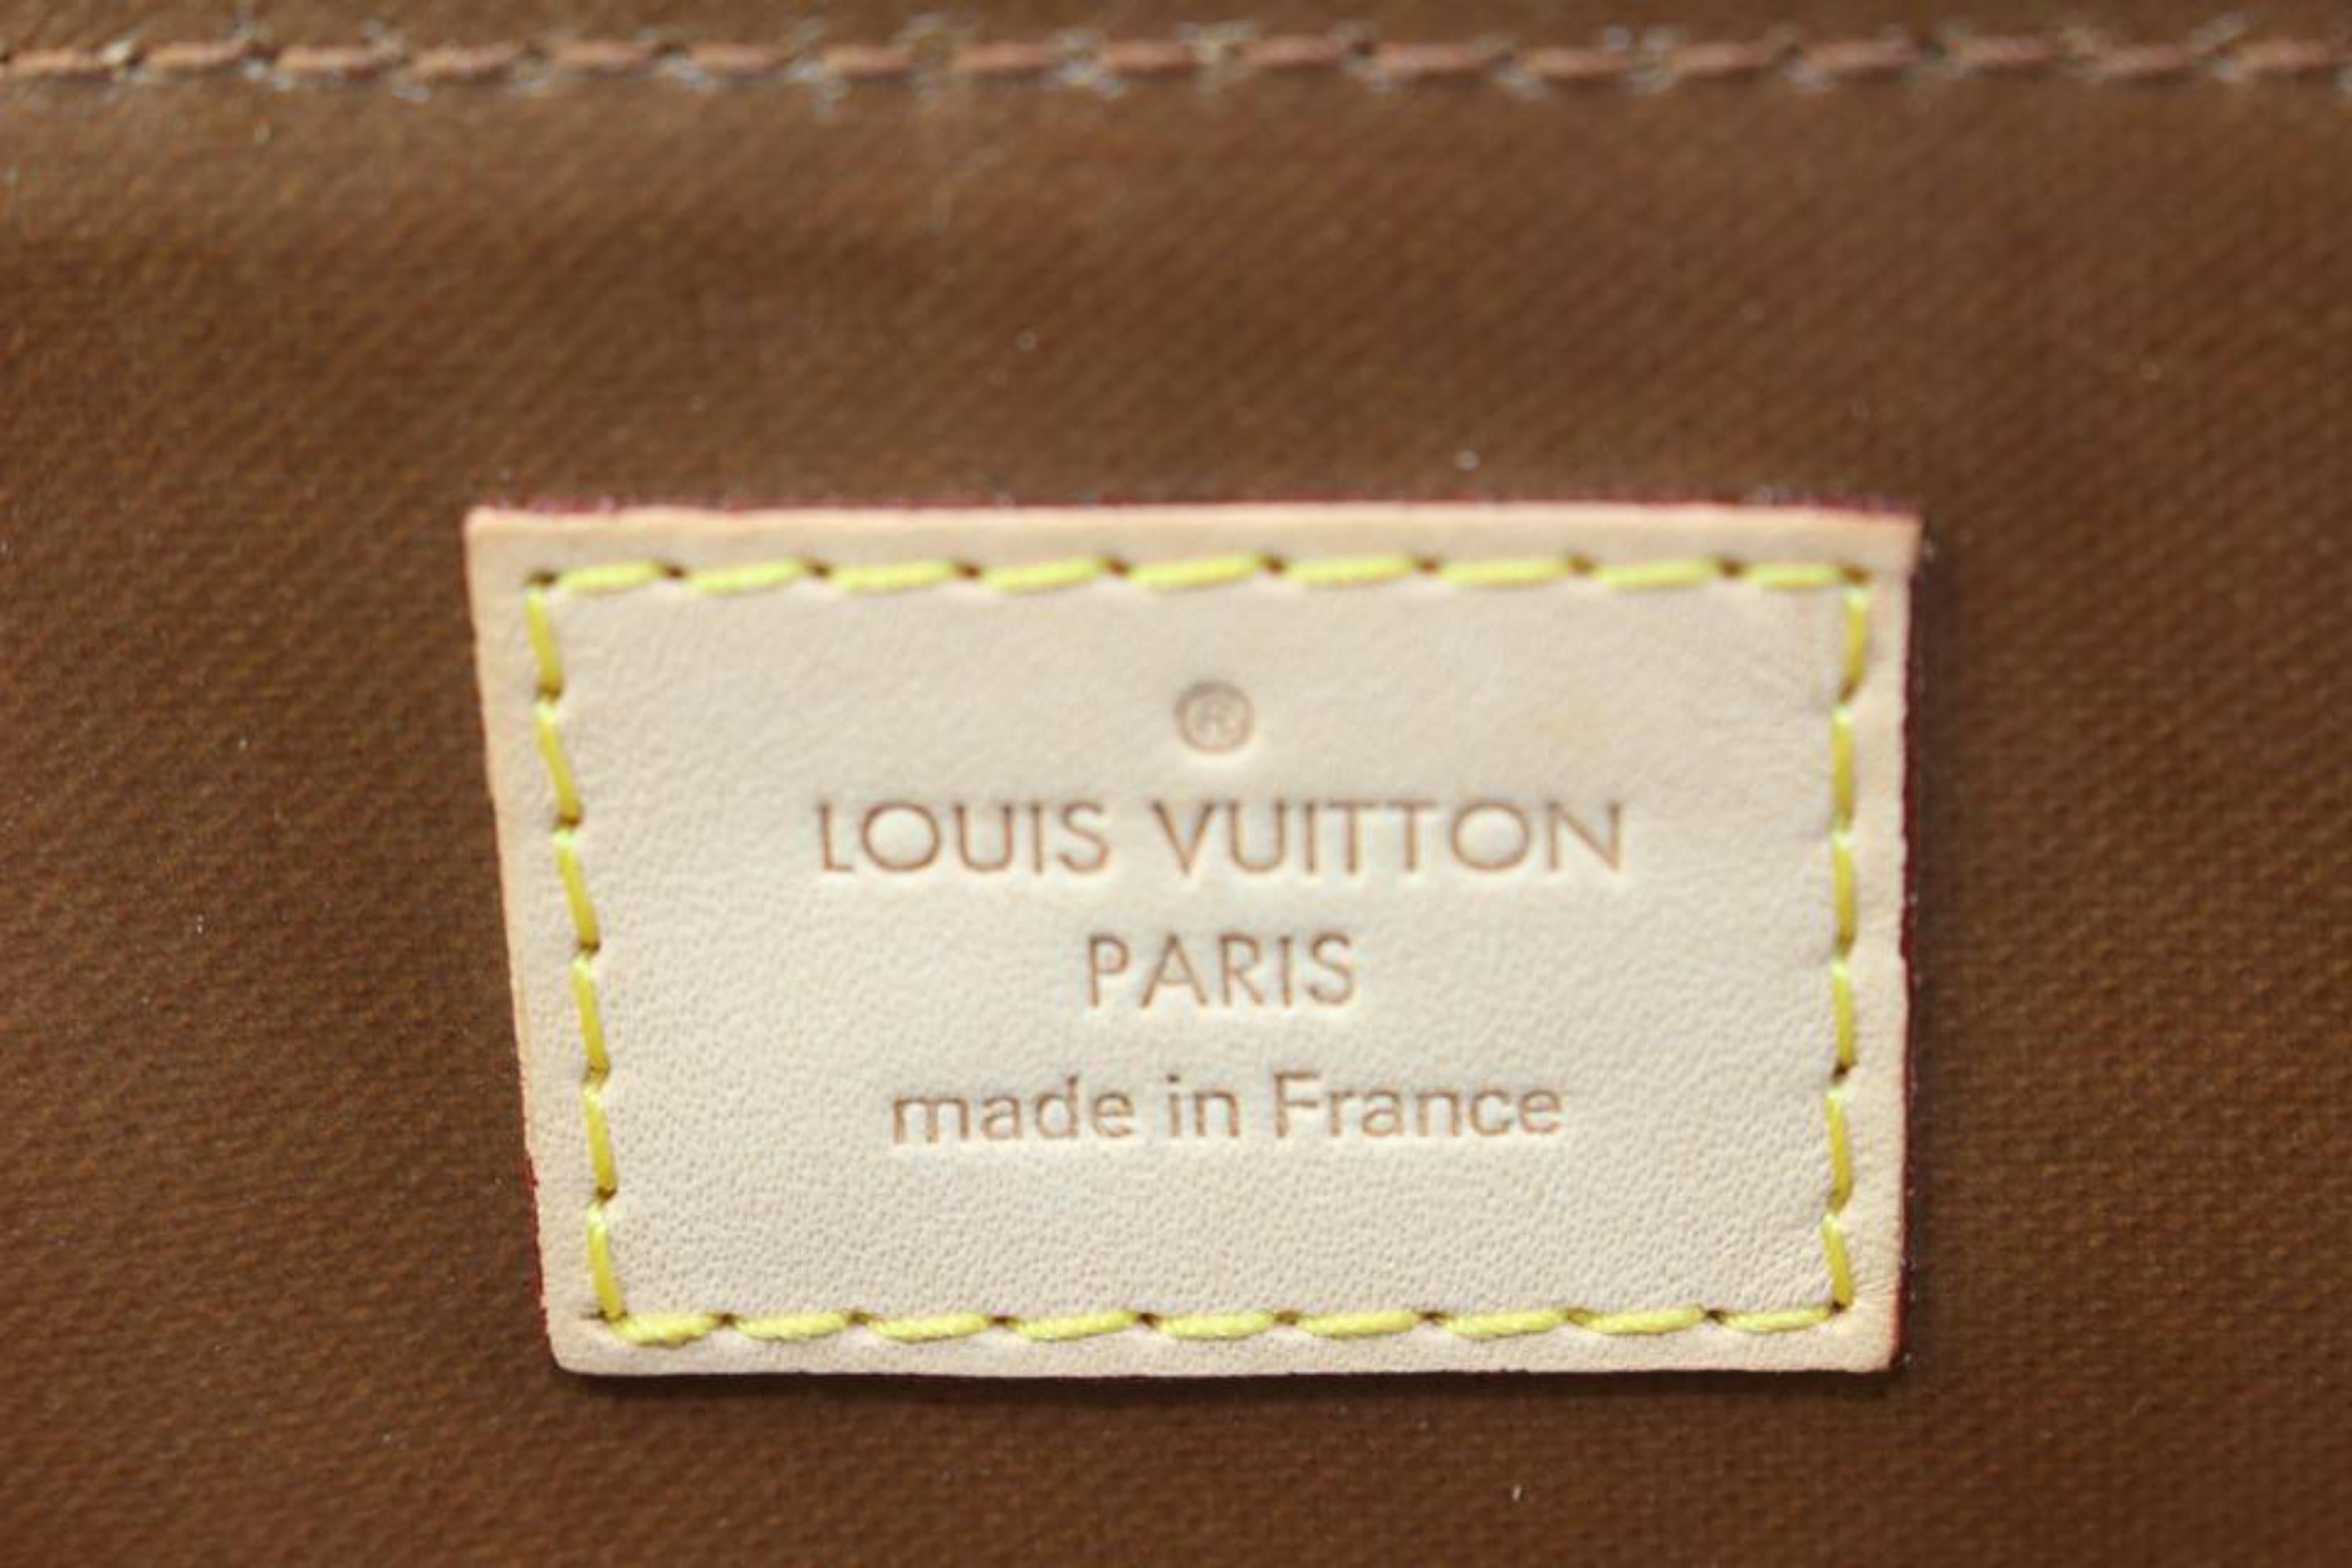 Louis Vuitton Ultra Rare Discontinued Monogram Shoe Care Kit Travel Set 32lk31s 4